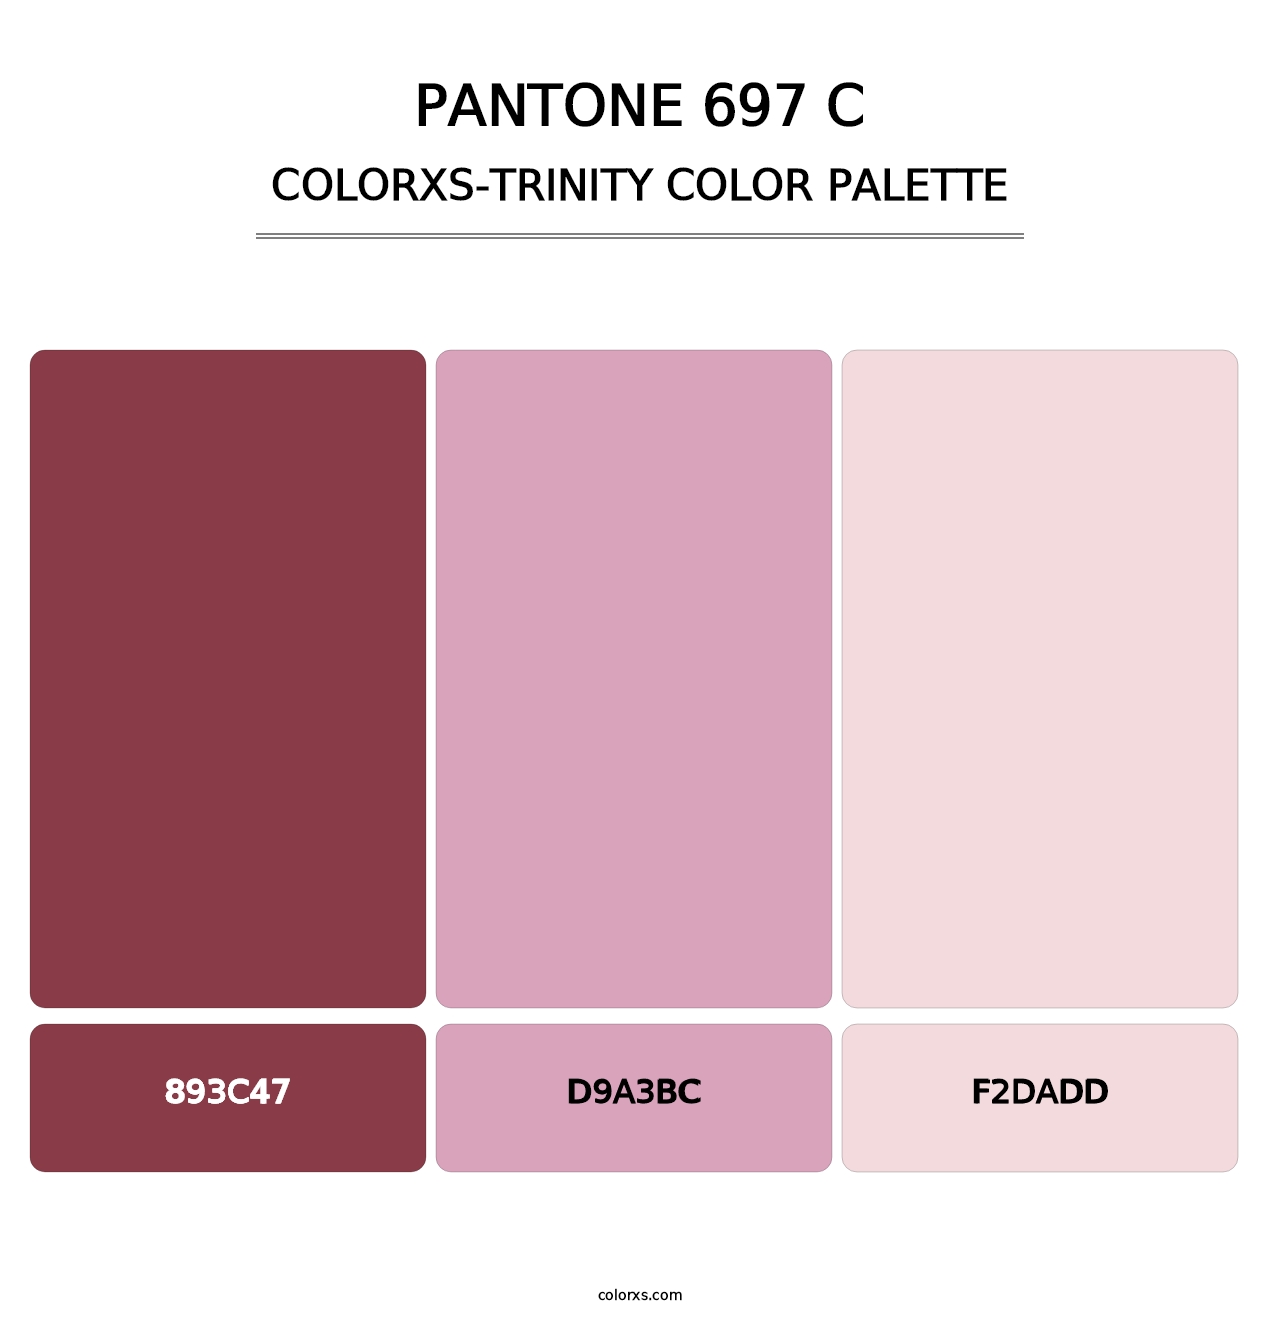 PANTONE 697 C - Colorxs Trinity Palette